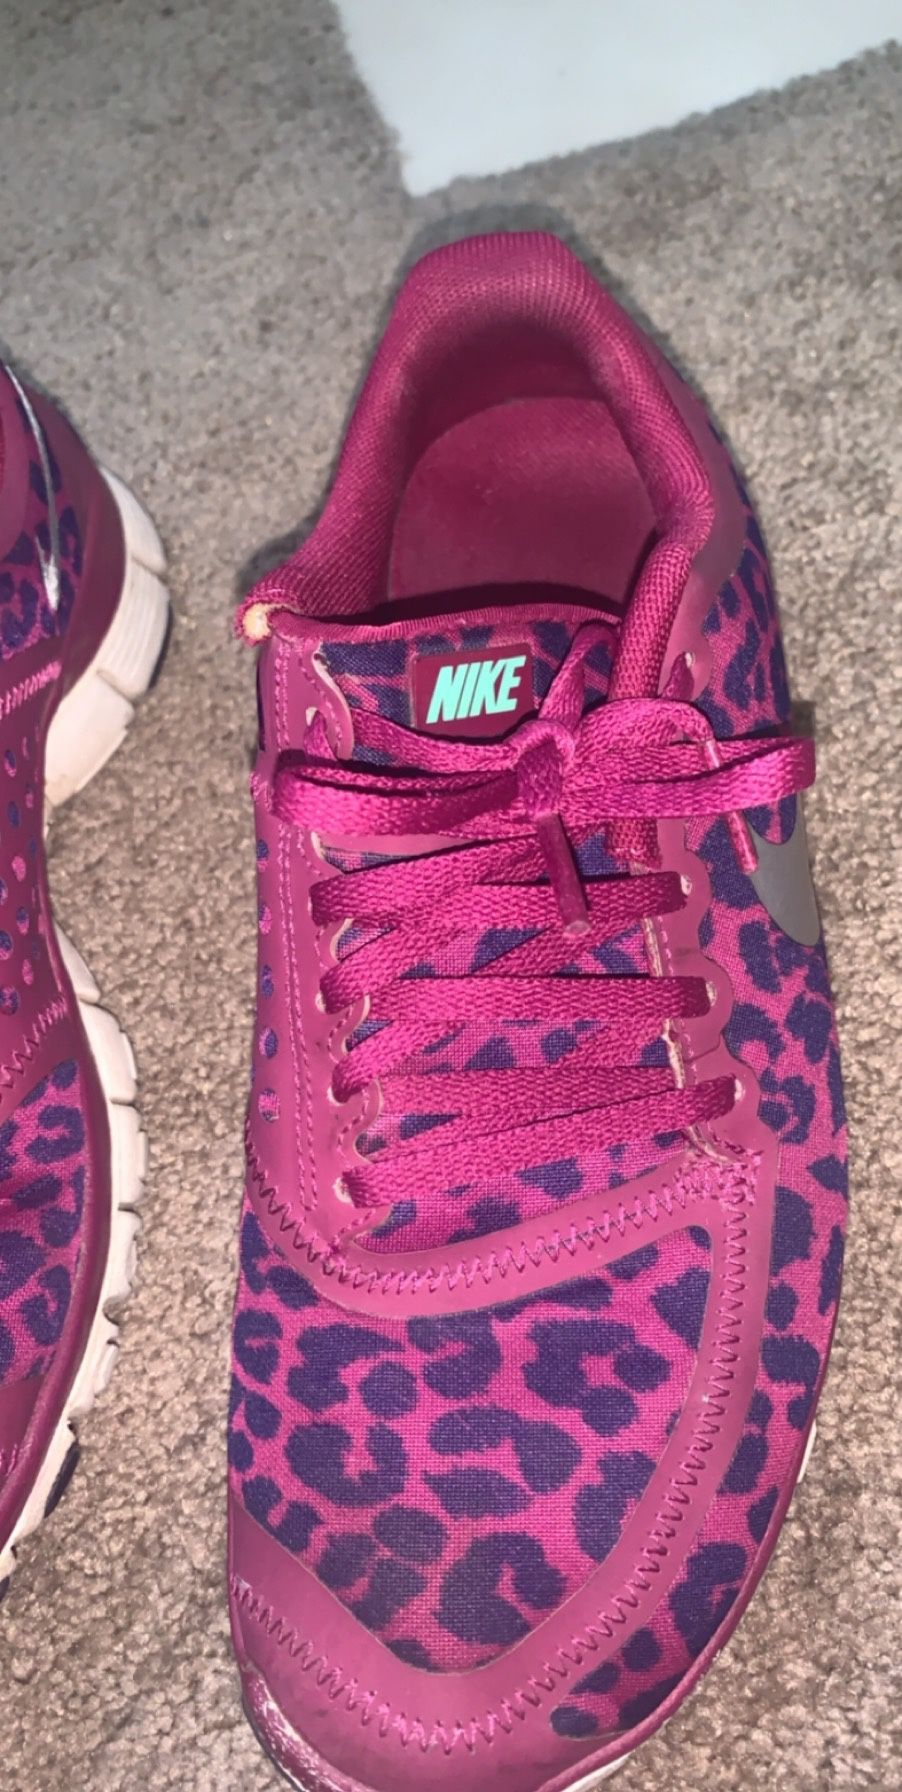 Cheetah Print Nike Running Shoes